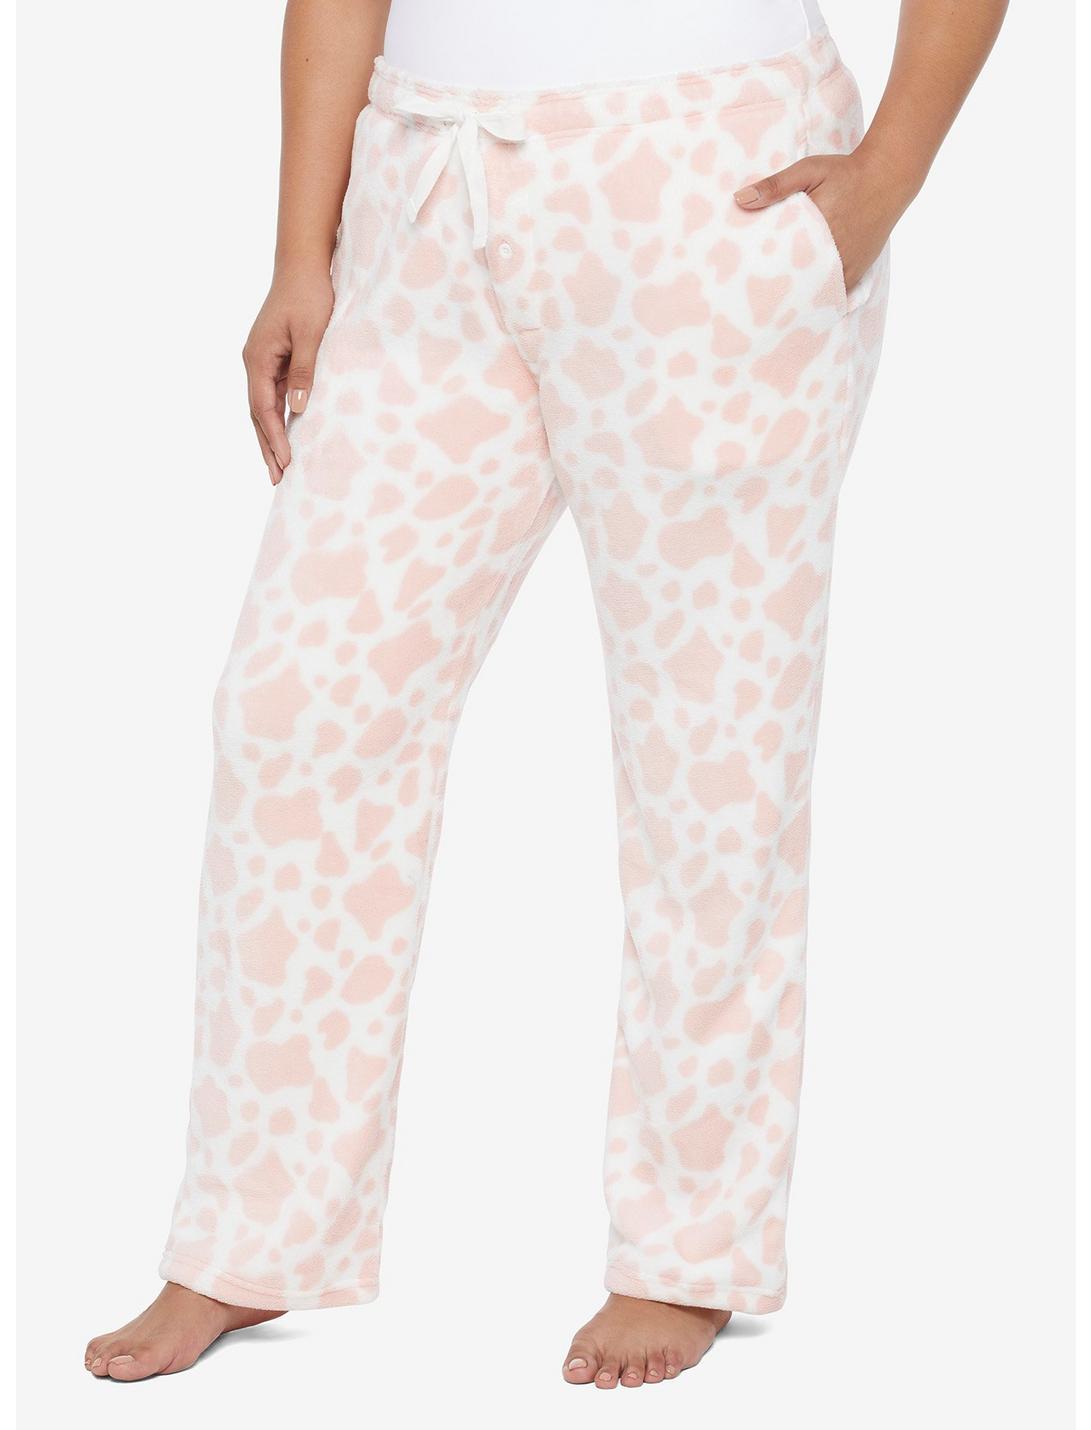 Pink Cow Fuzzy Pajama Pants Plus Size